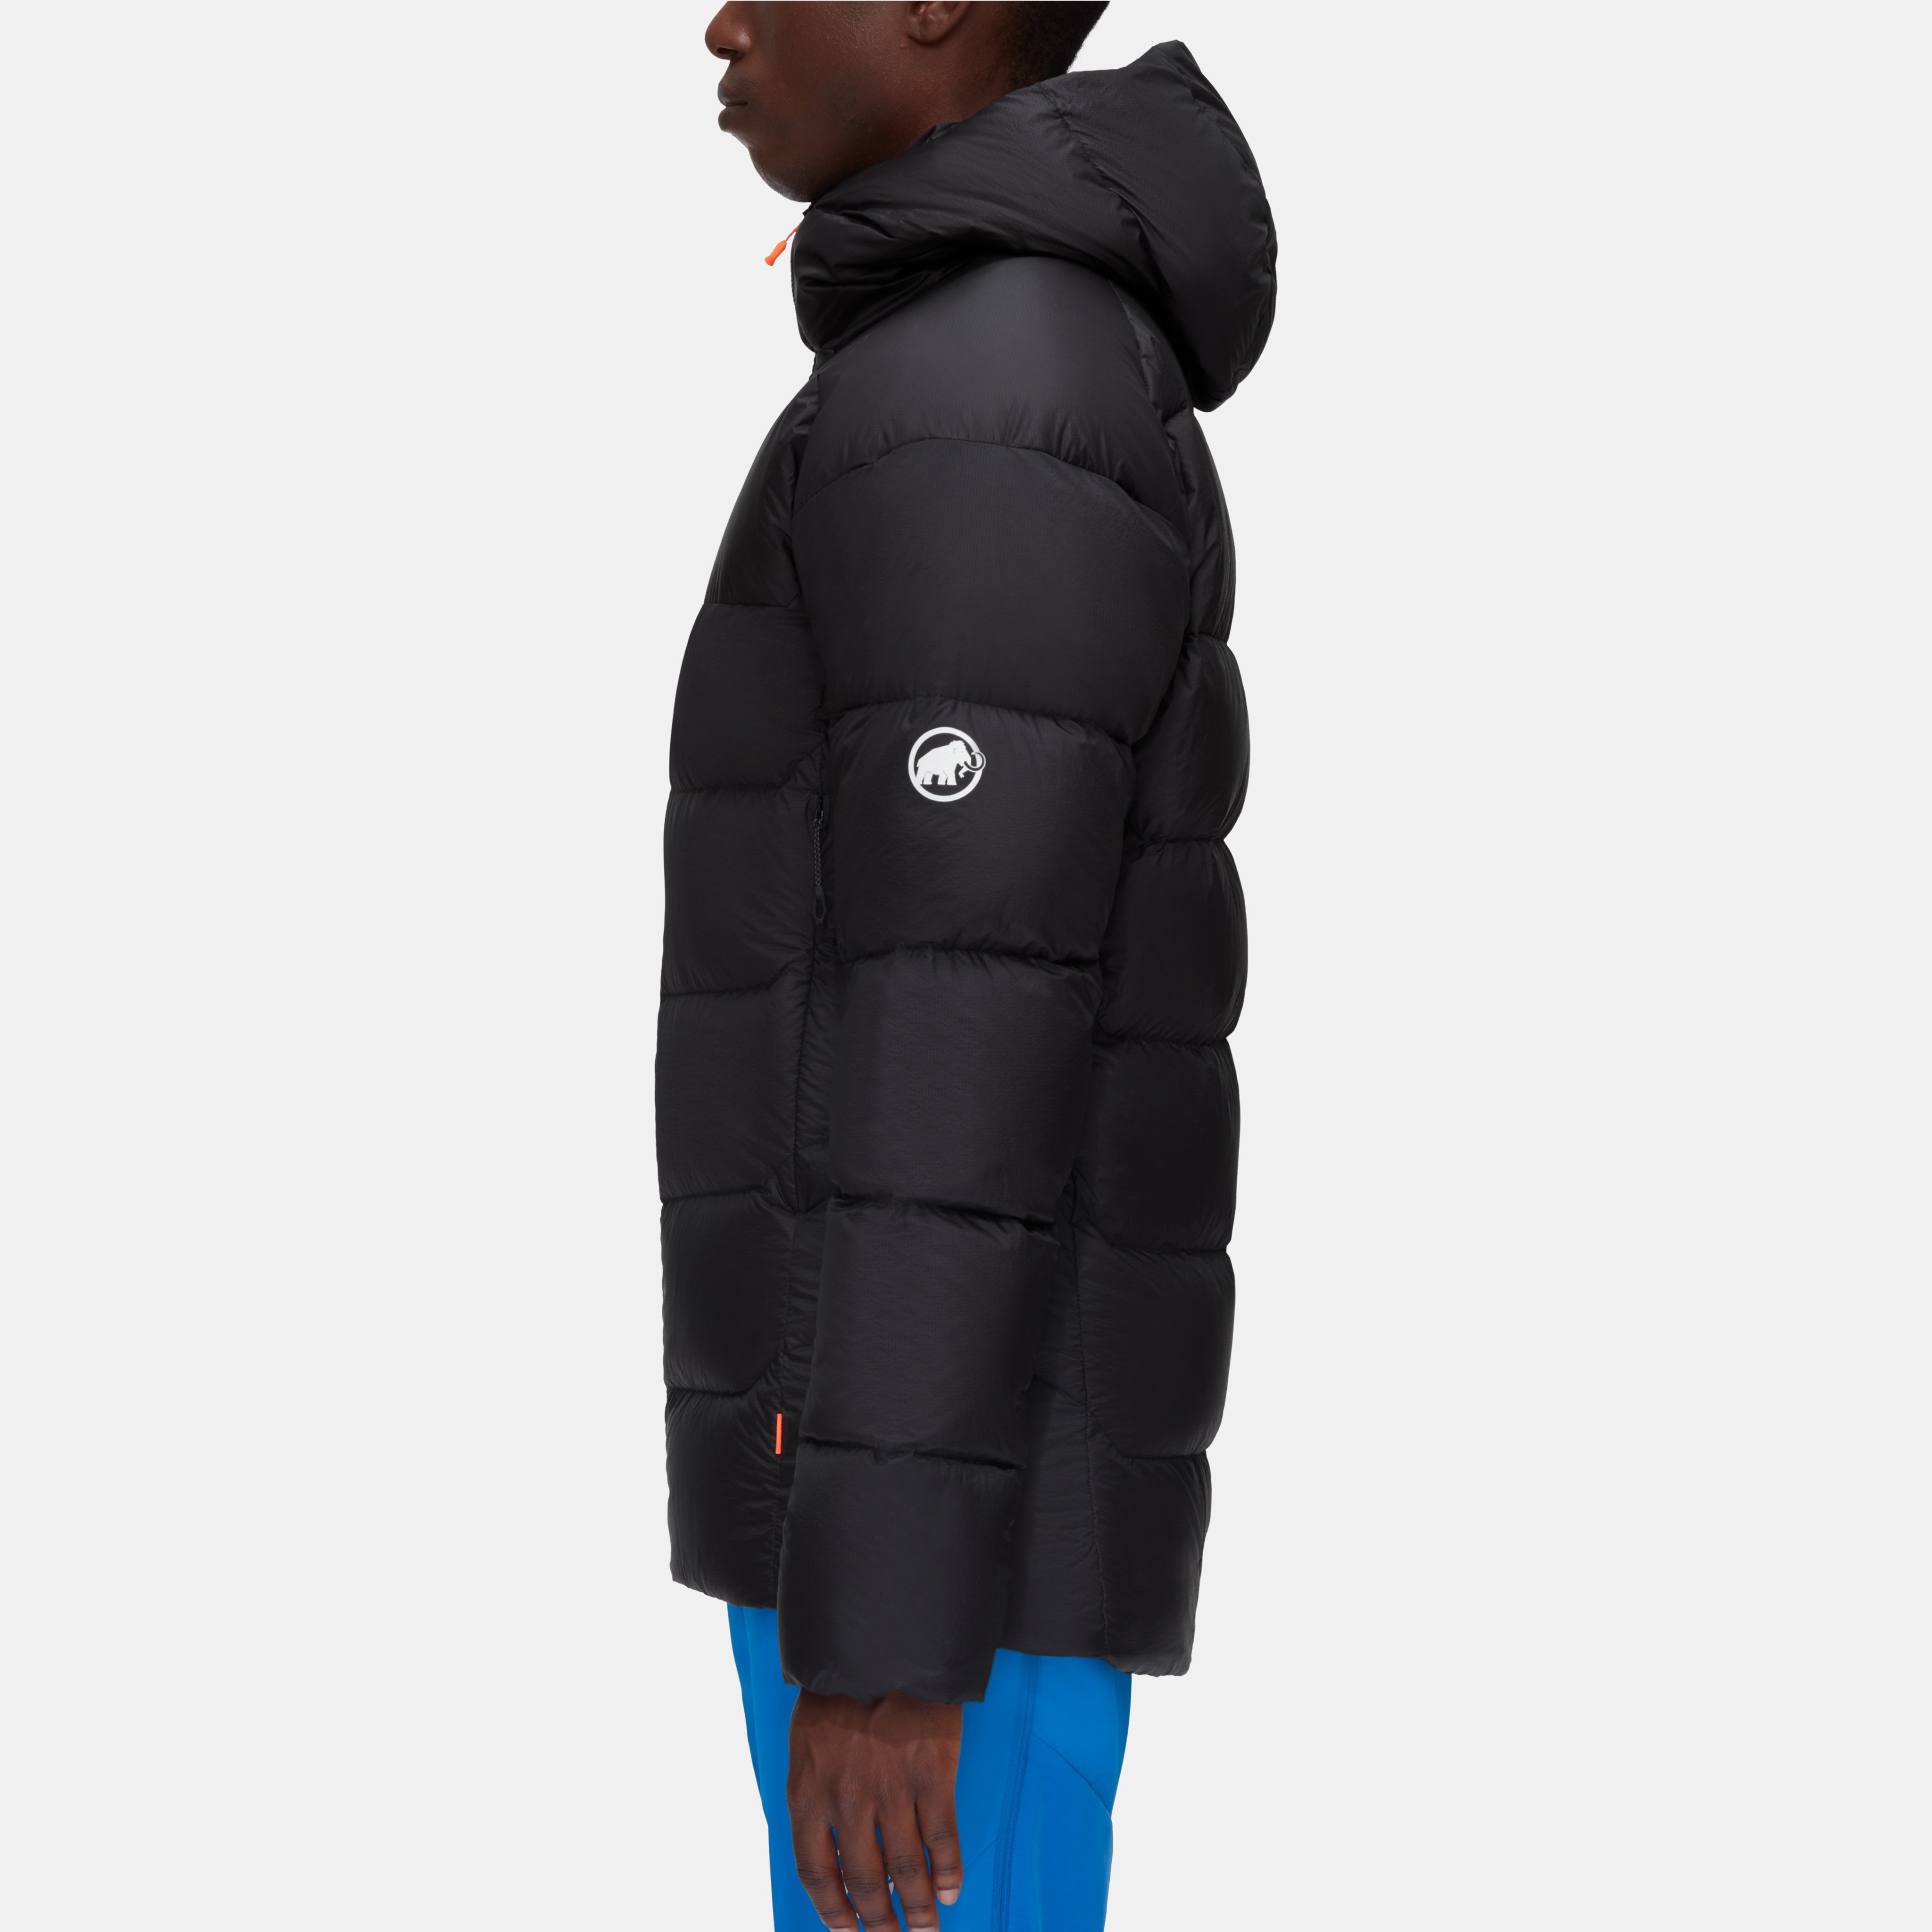 Meron IN Hooded Jacket Men product image